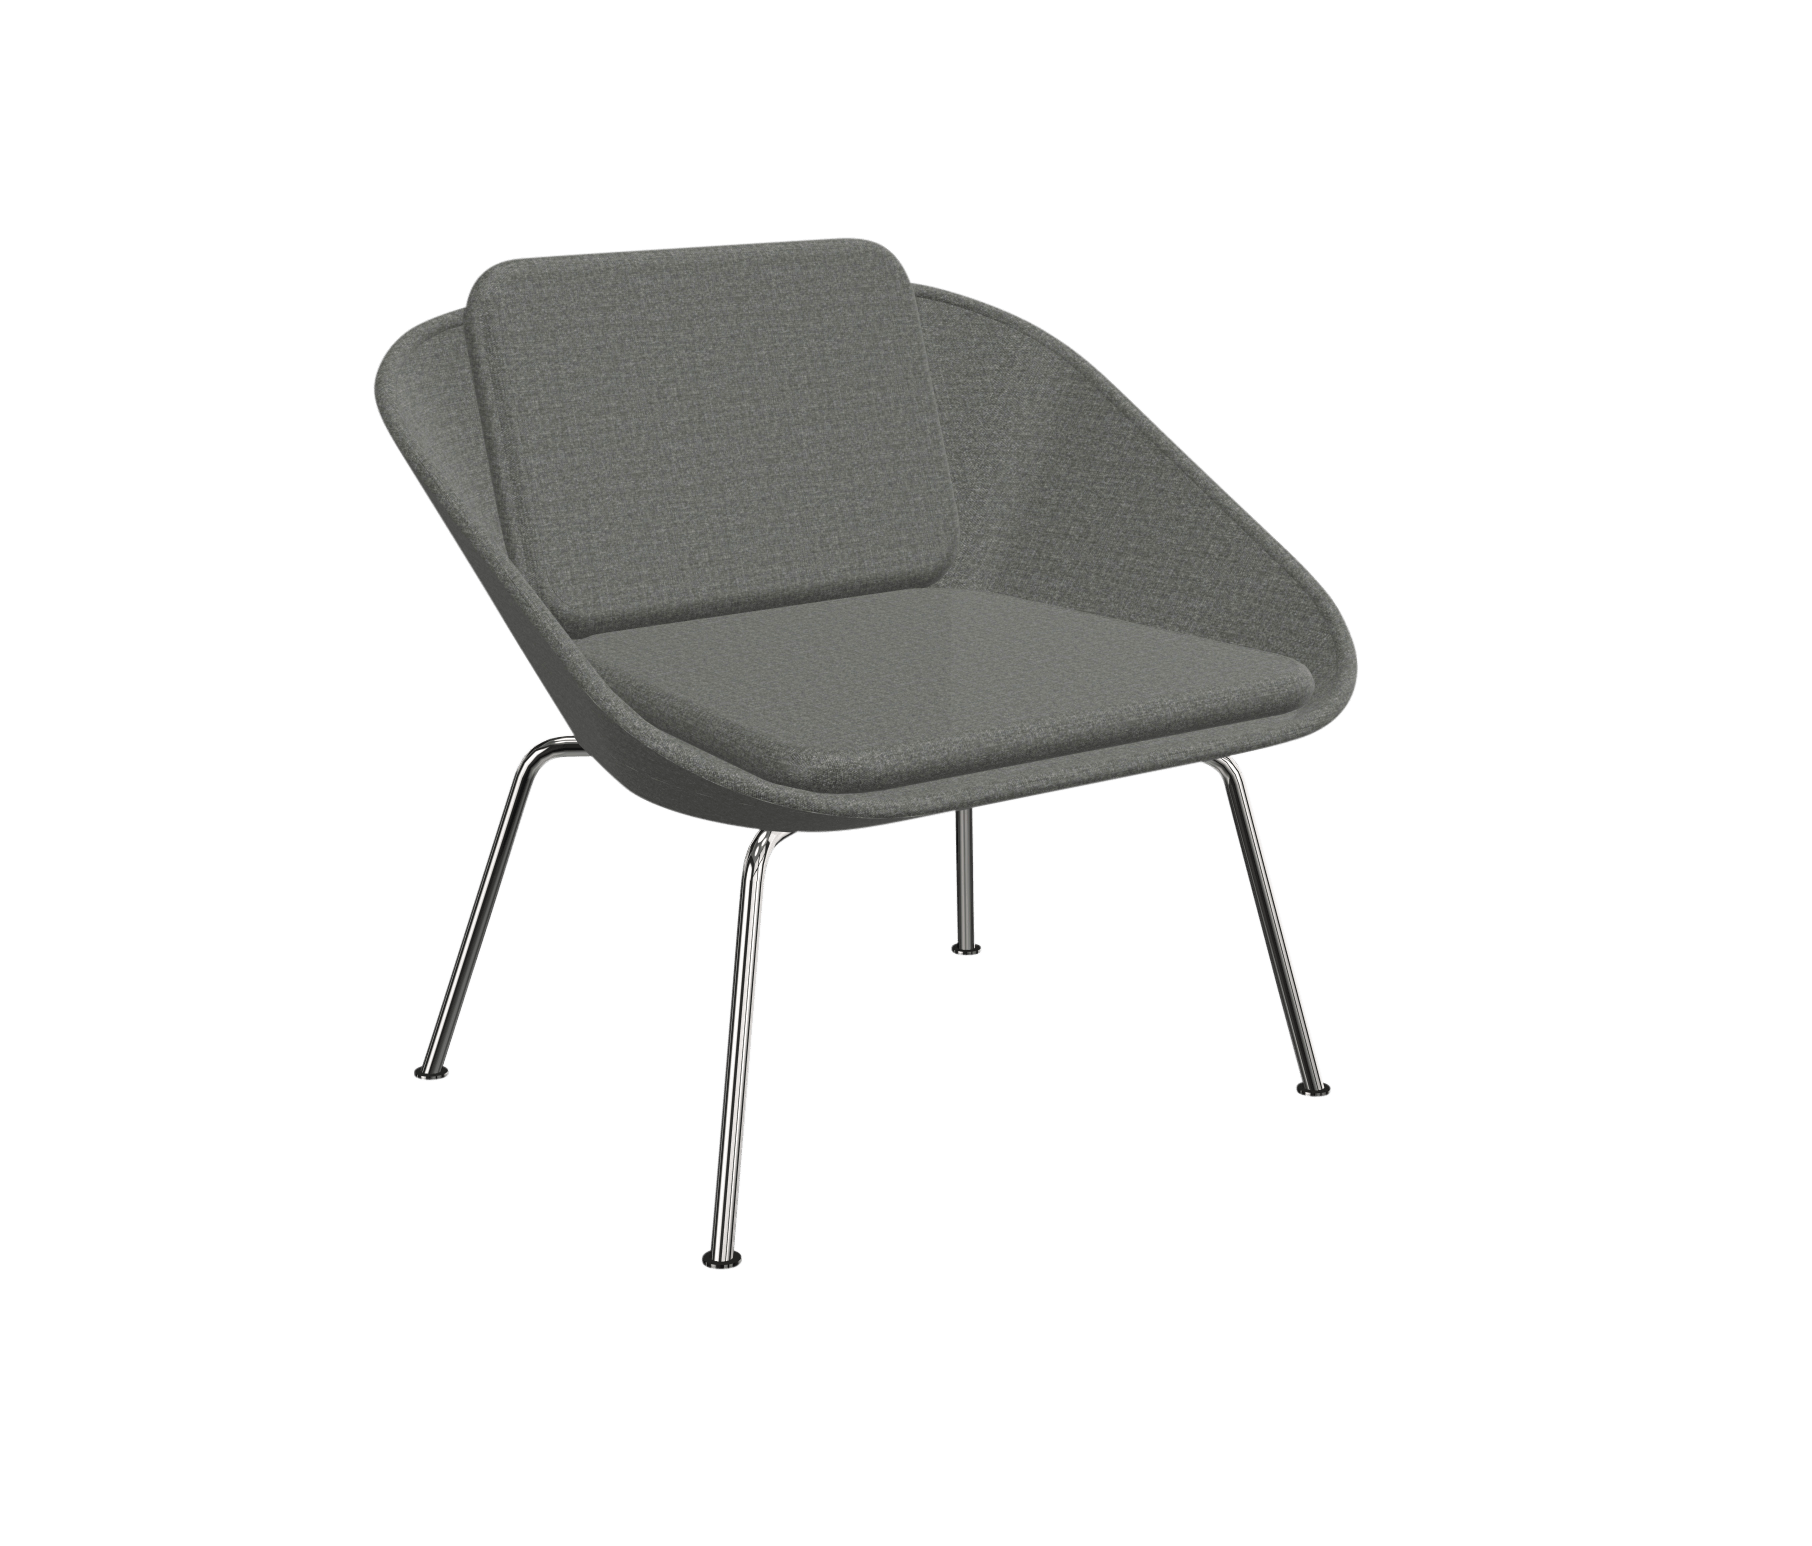 A grey lounge chair